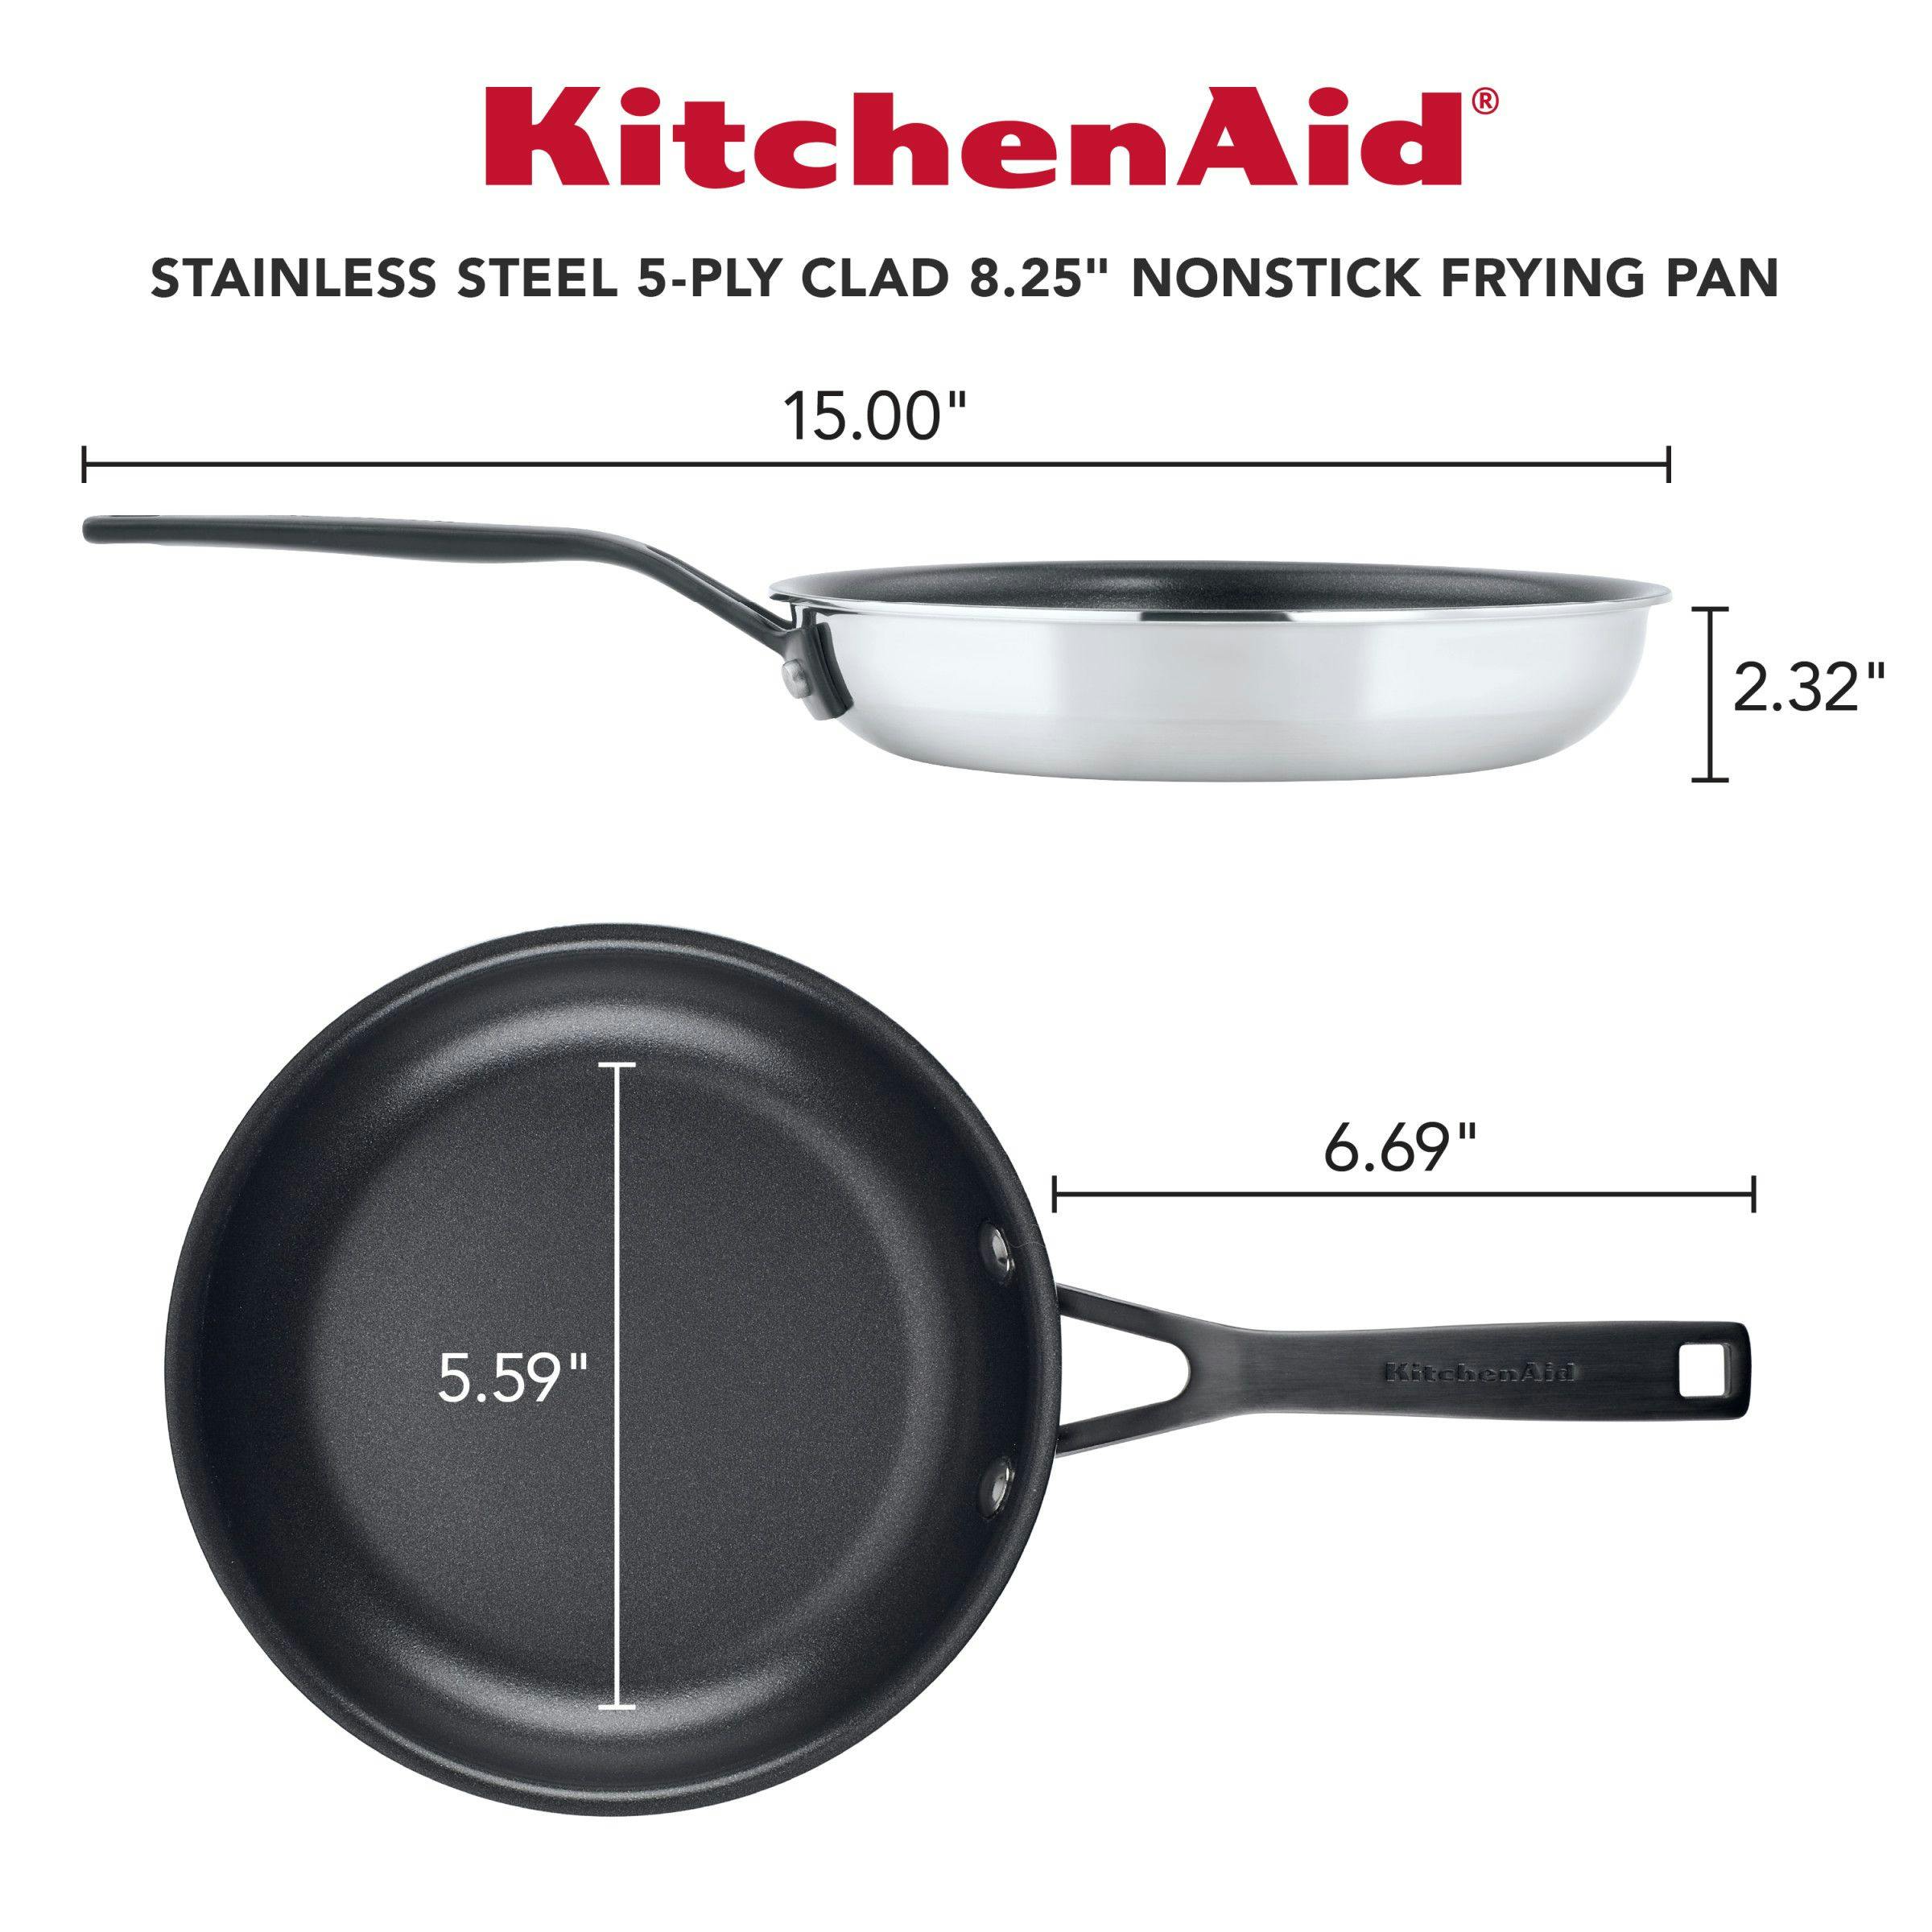 KitchenAid Hard-Anodized Induction Nonstick Wok with Helper Handle, 12.25-Inch, Matte Black